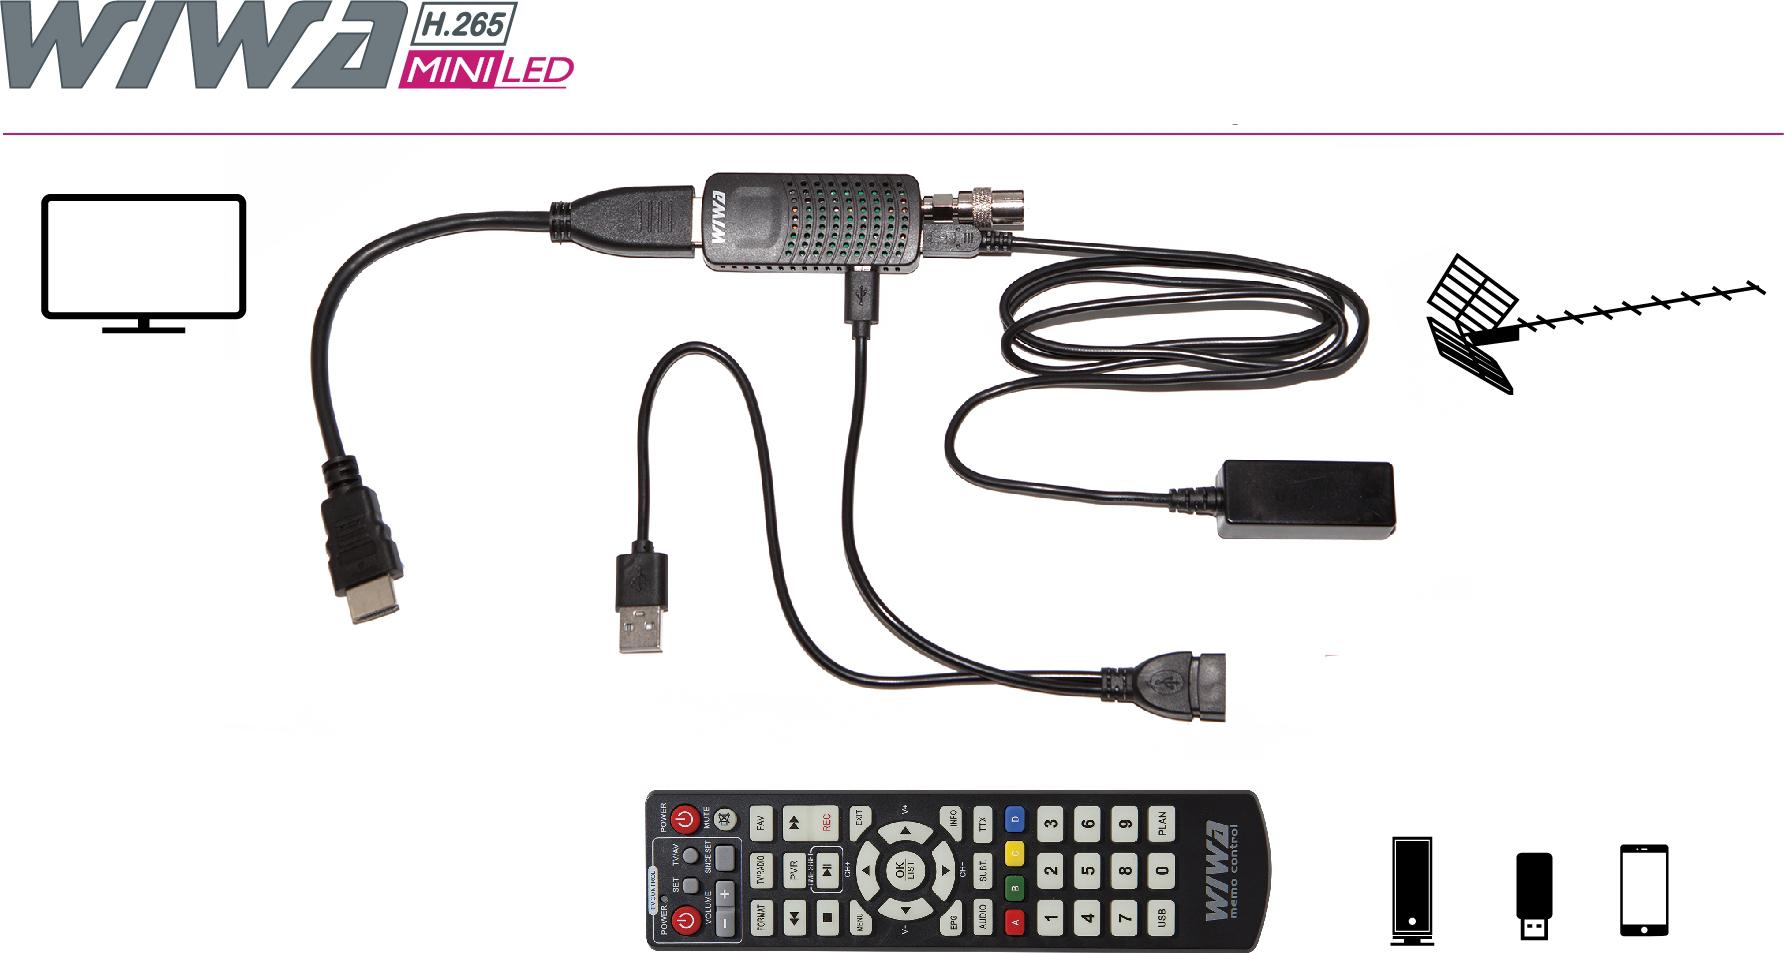 Tuner DVB-T/T2 WIWA H.265 MINI LED - podsumowanie: